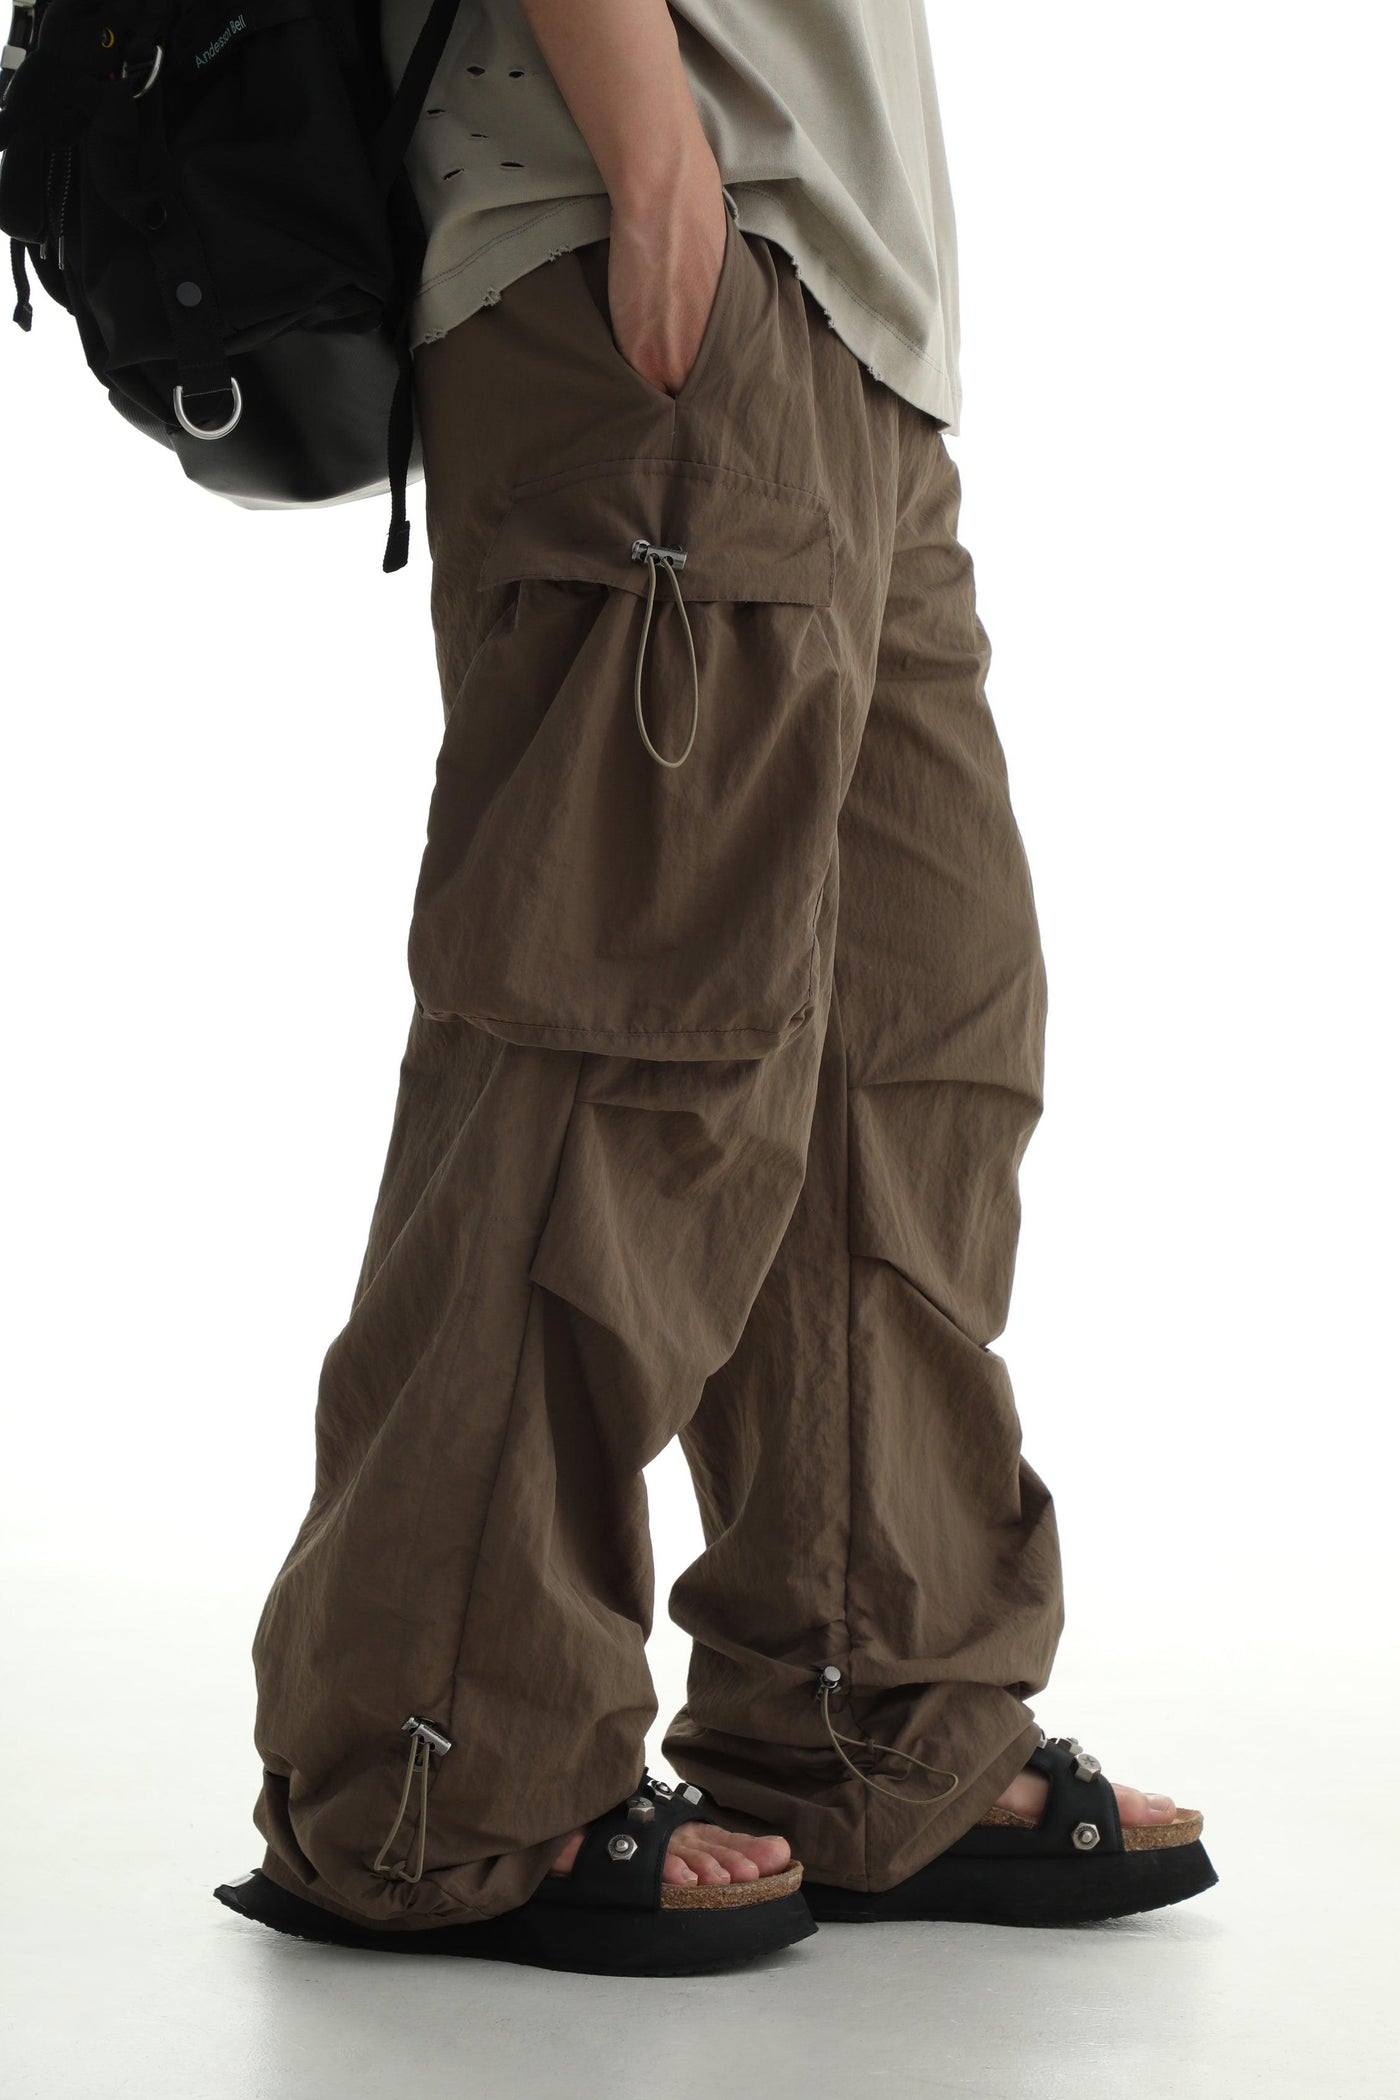 Drawstring Paratrooper Pants Korean Street Fashion Pants By Mason Prince Shop Online at OH Vault